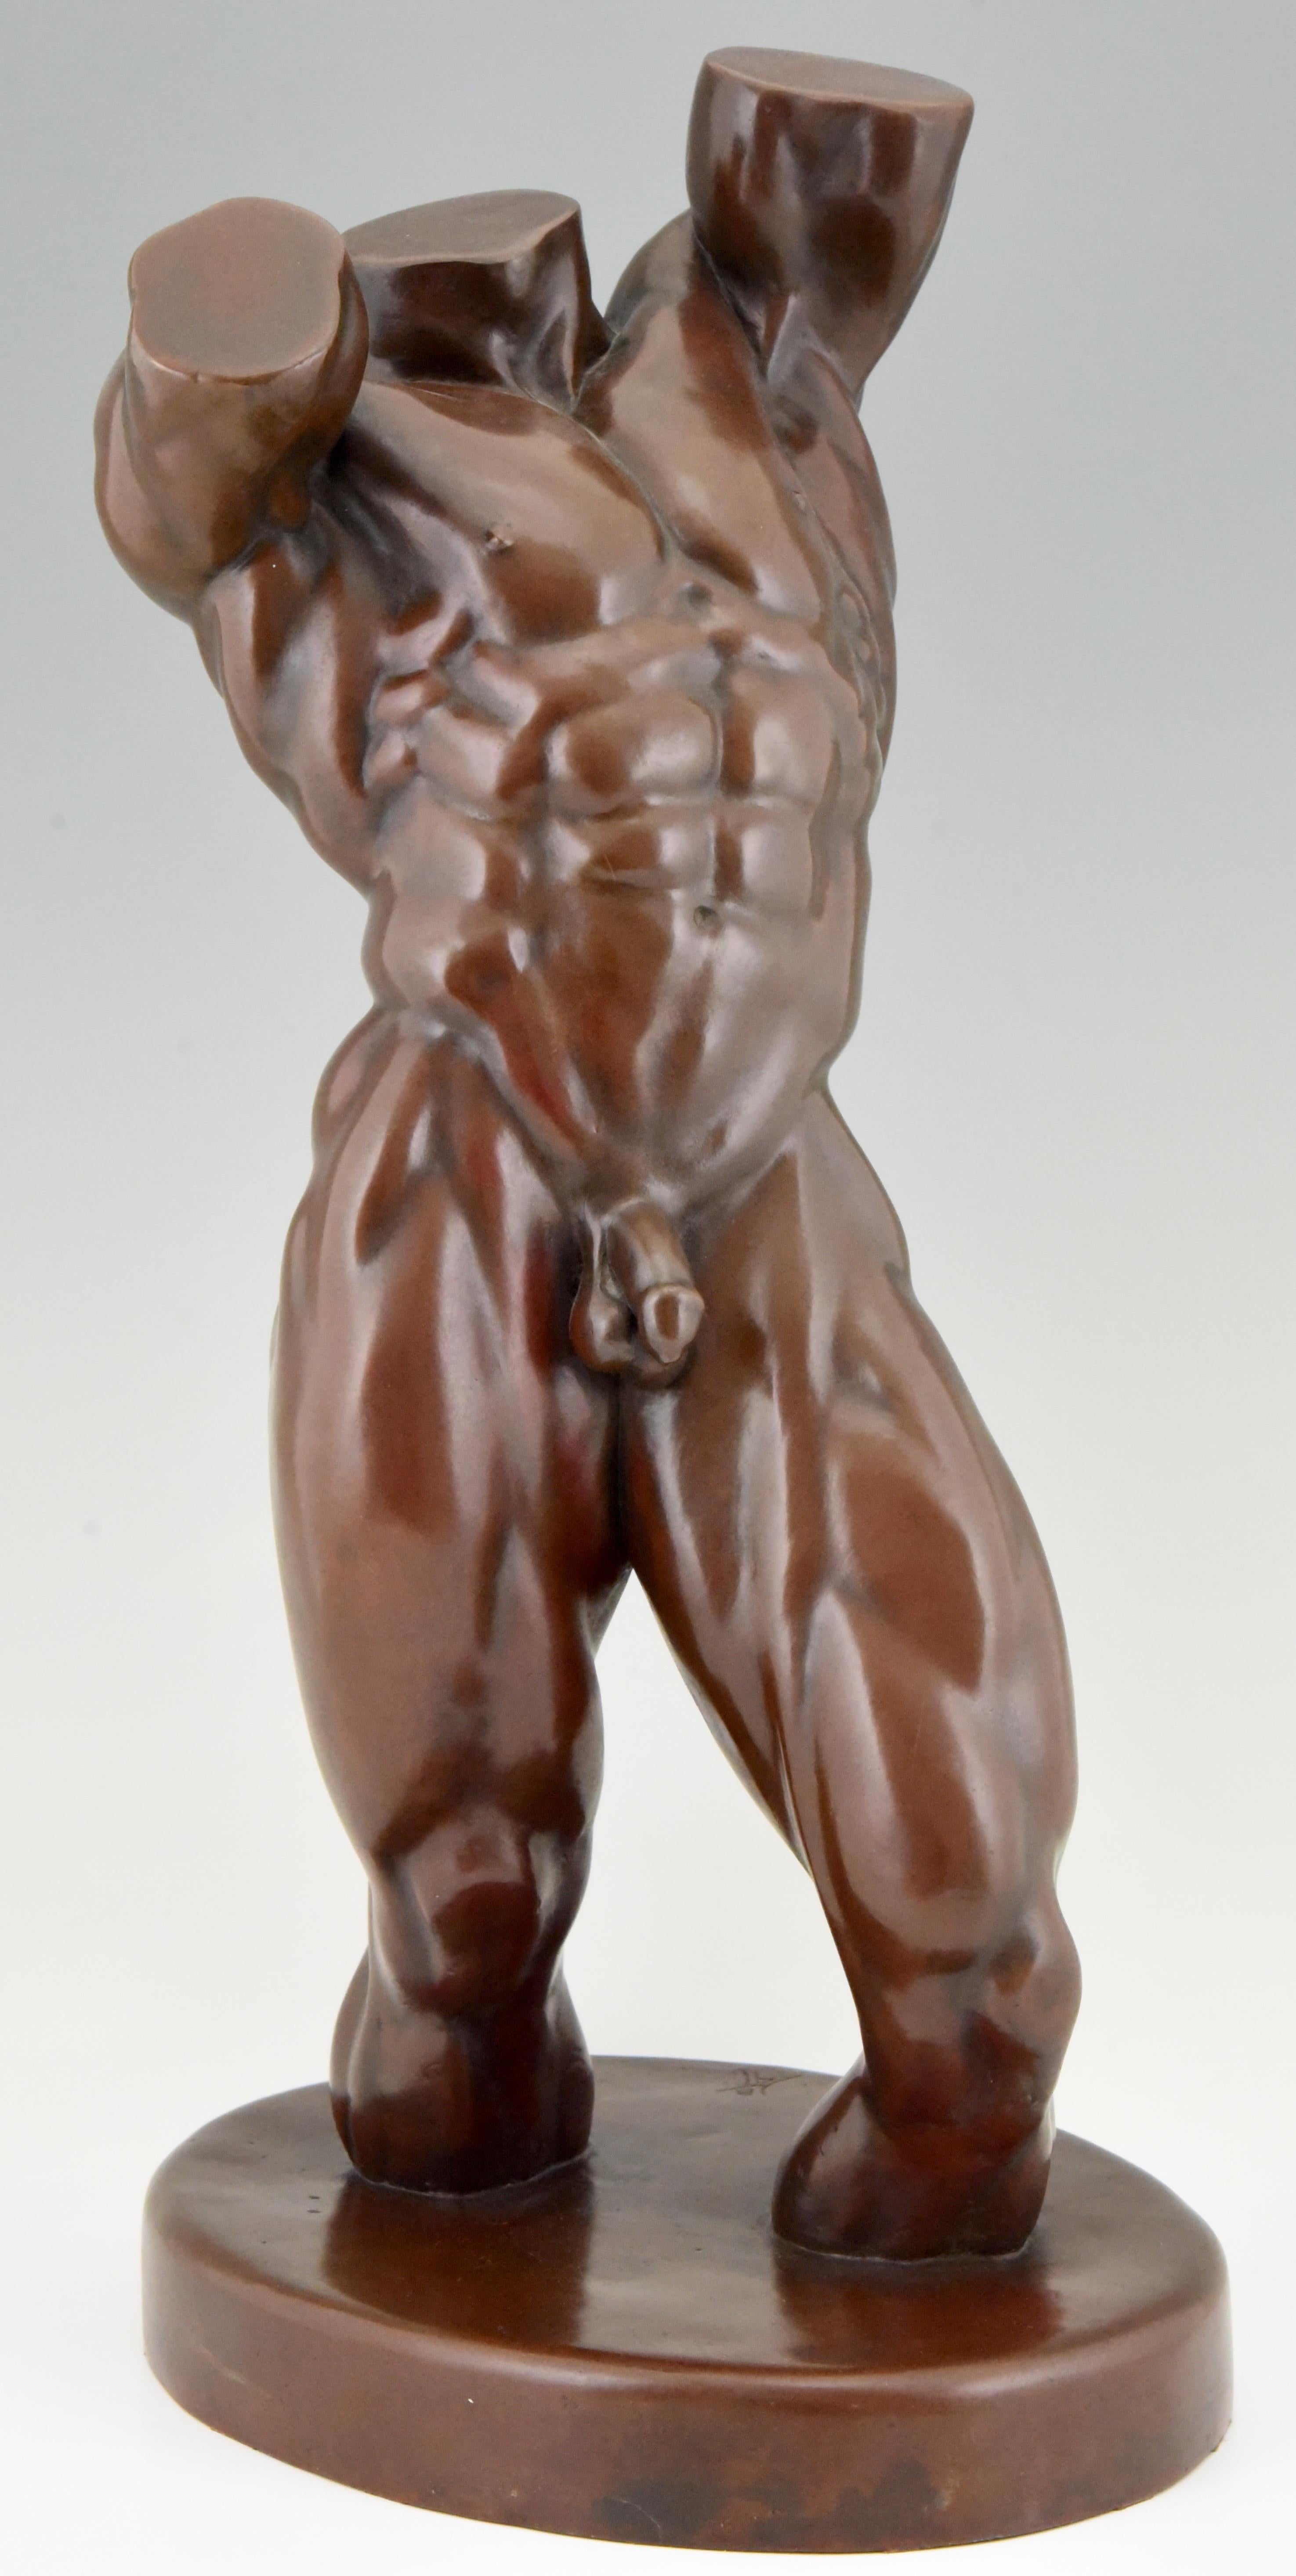 Description: Modern bronze nude sculpture male torso. 
Artist: Bruce A. Kamerling. 
Marks: Monogrammed BKA
Origin: USA 
Date: 1980
Material: Patinated bronze. 
Size: 
H. 66 cm. x L. 34 cm. x W. 27 cm. 
H. 26 inch x L. 13.4 inch x W. 10.6